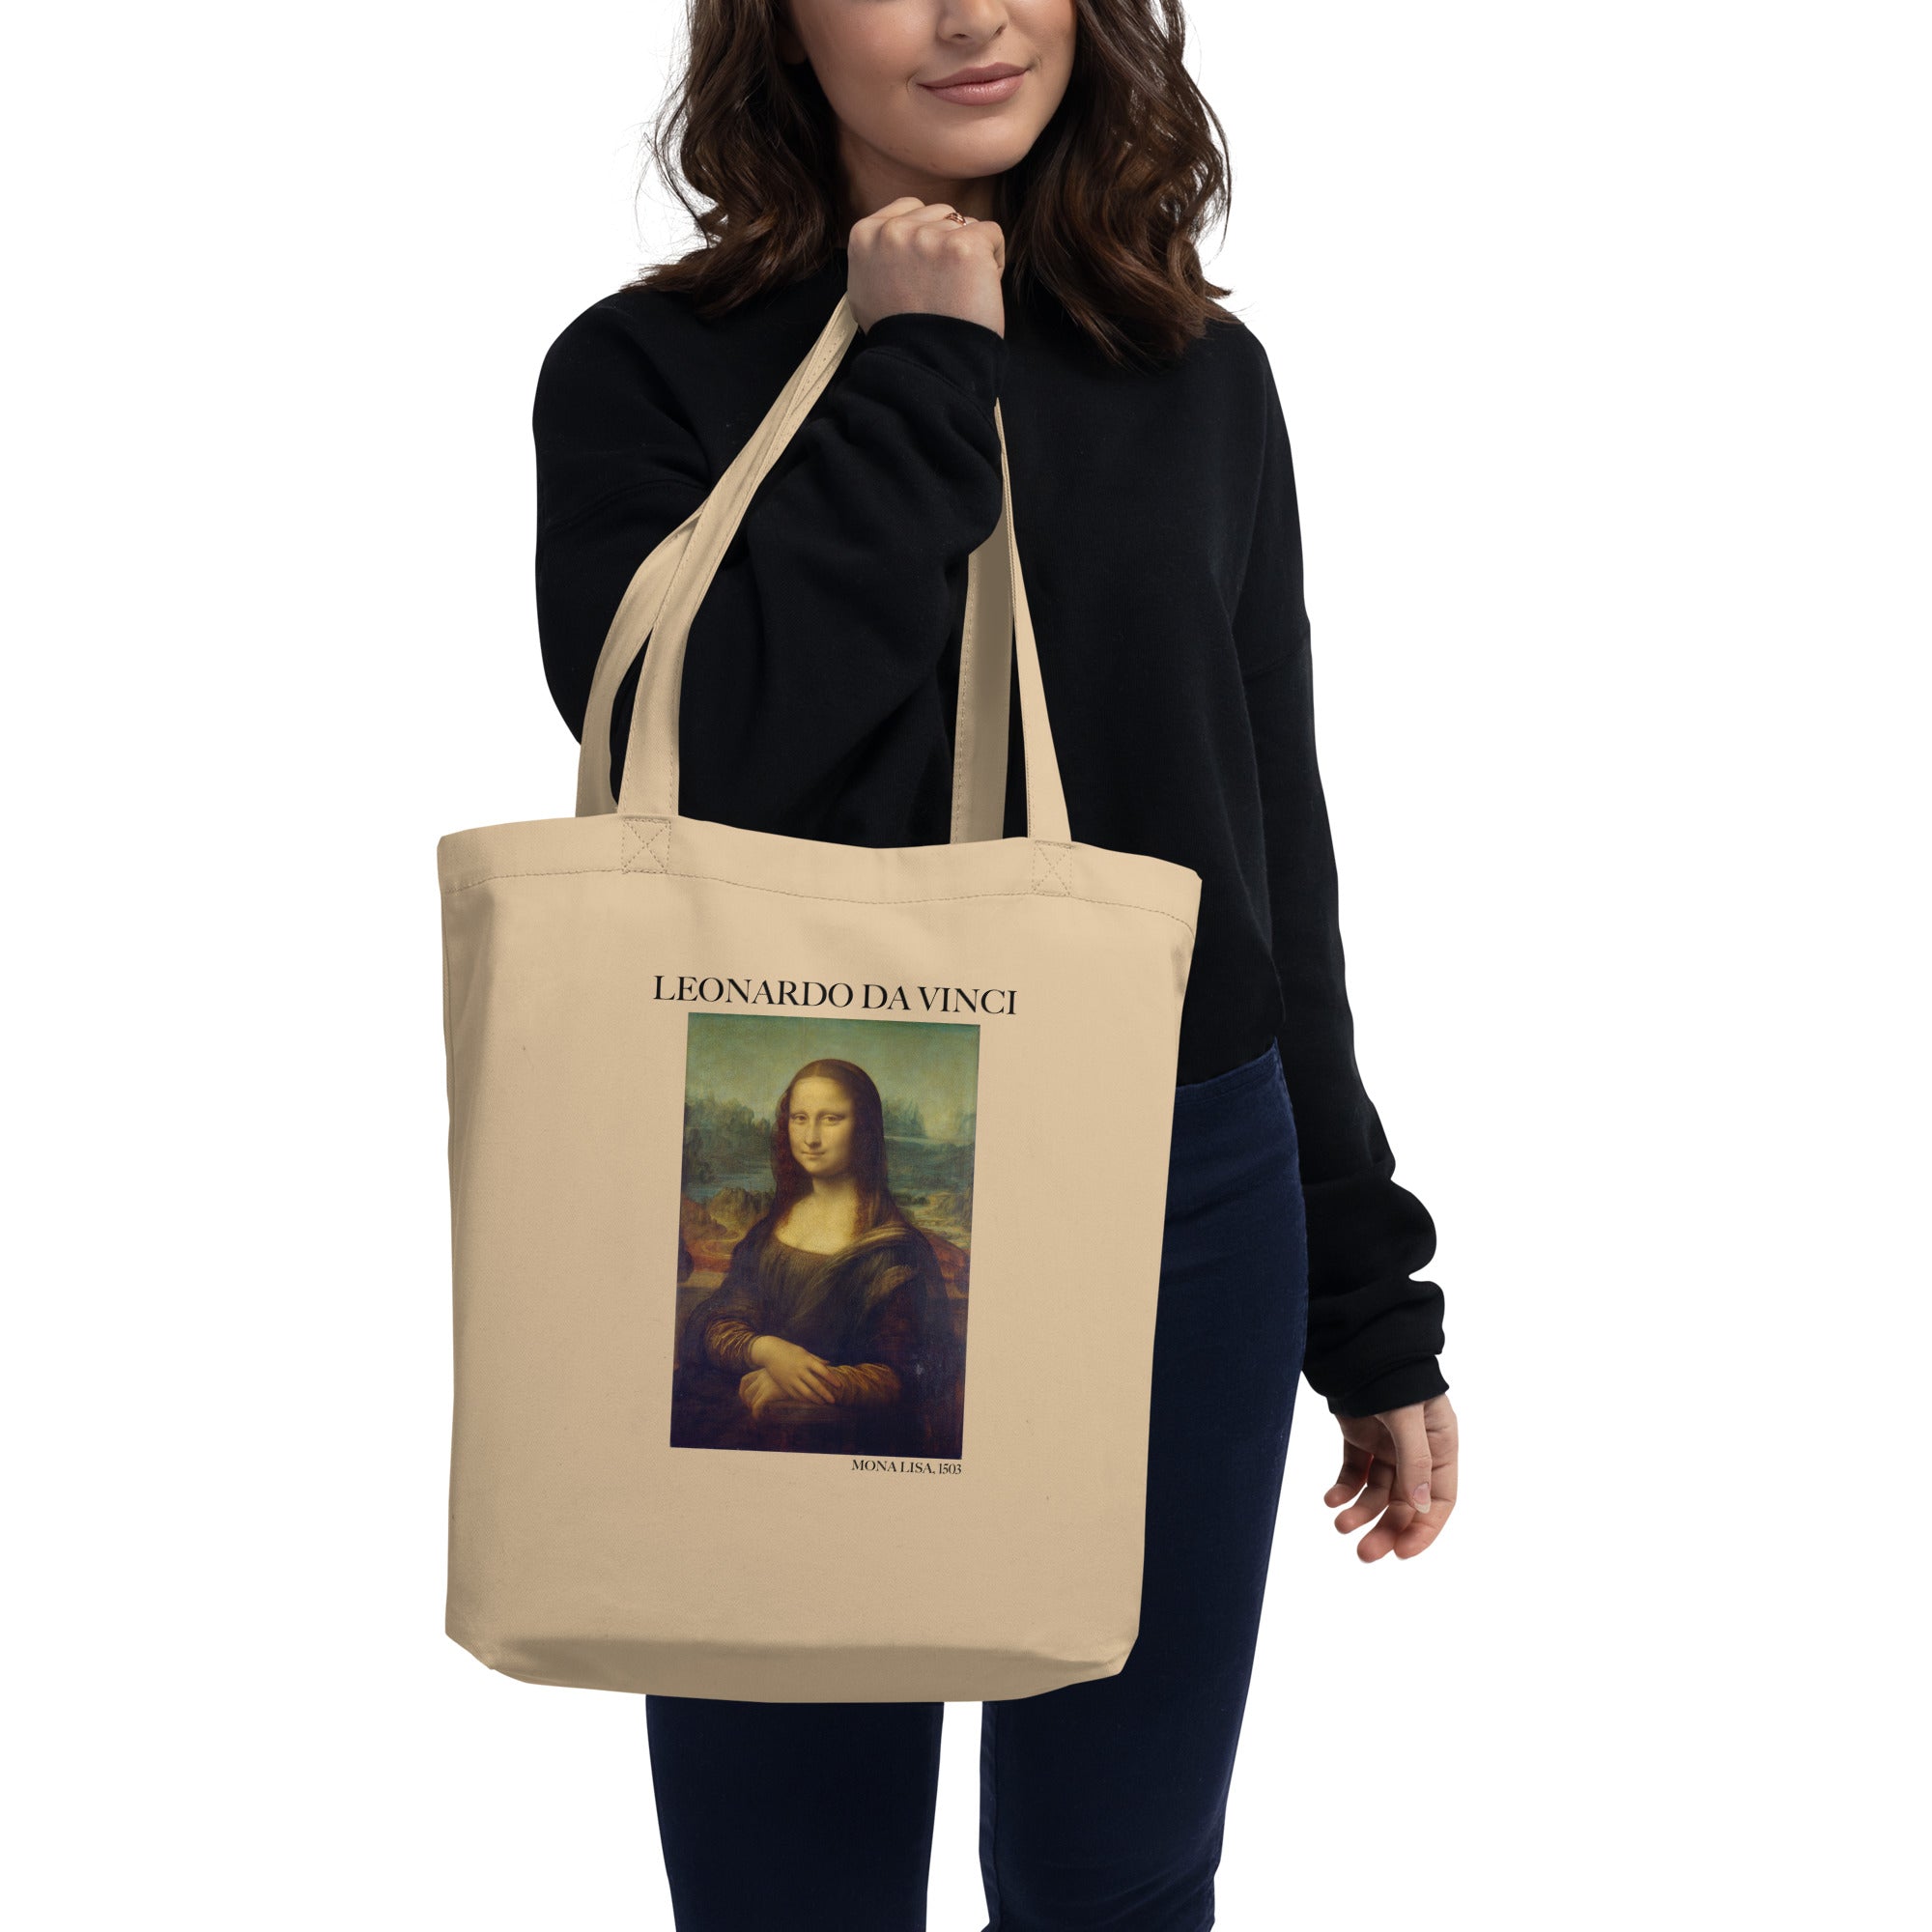 Leonardo da Vinci 'Mona Lisa' Famous Painting Totebag | Eco Friendly Art Tote Bag